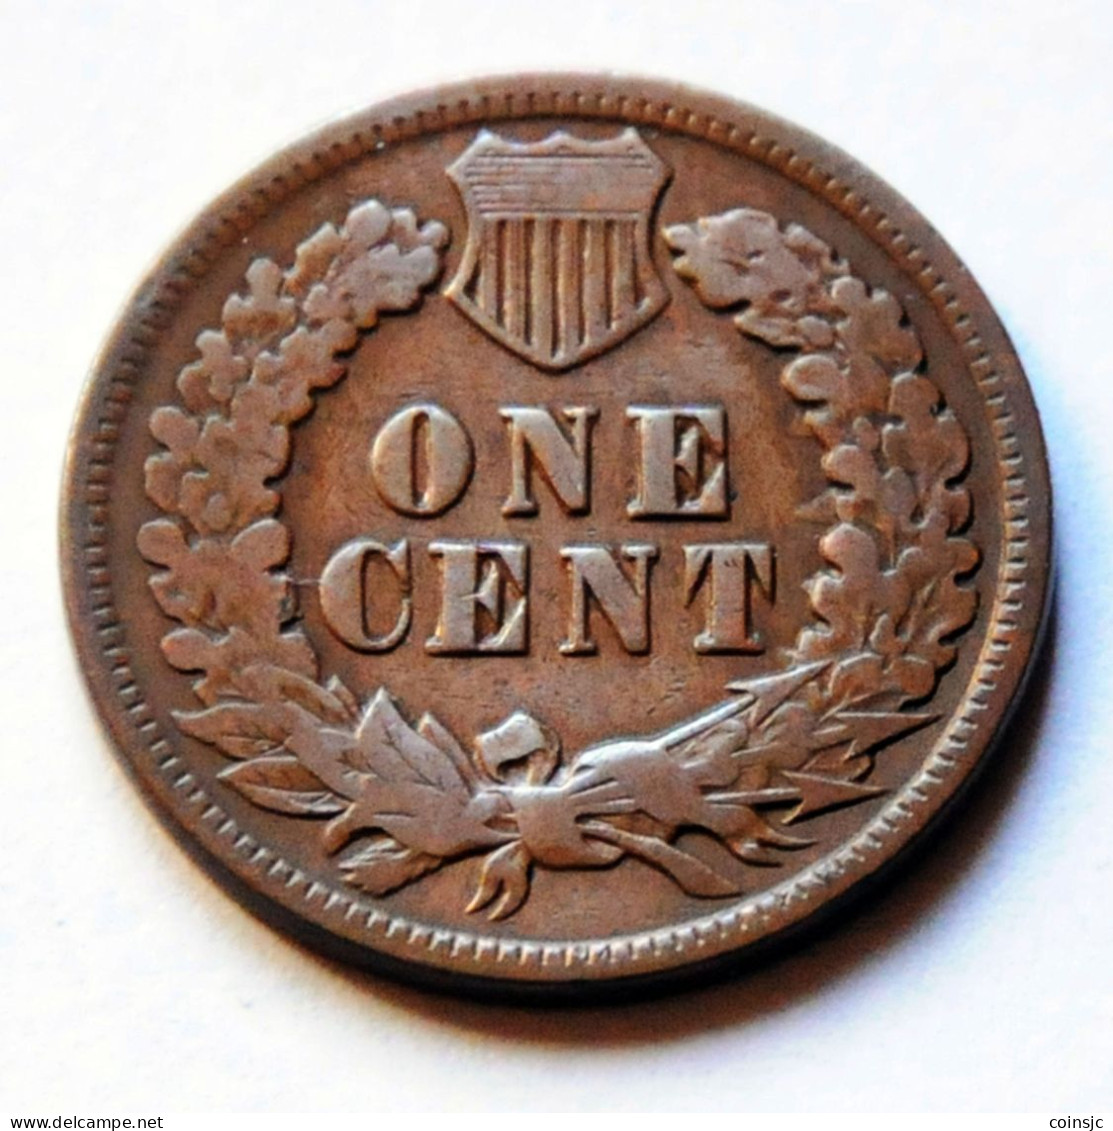 US - 1 CENT - 1905 - Half Cents